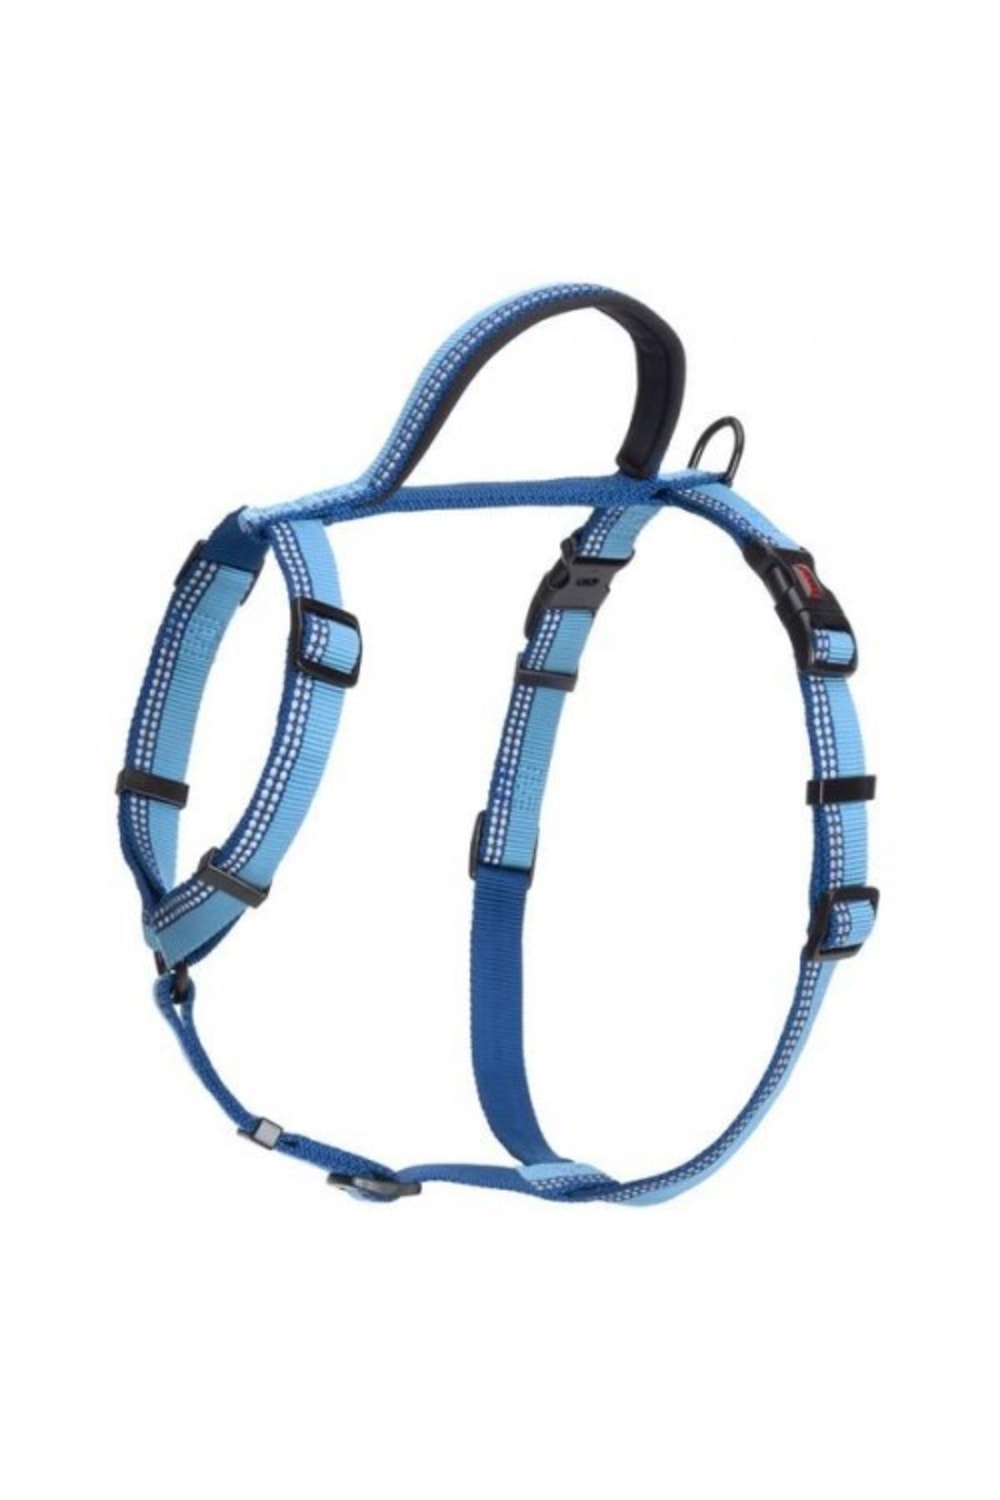 Company Of Animals Halti Walking Dog Harness (Blue) (M)